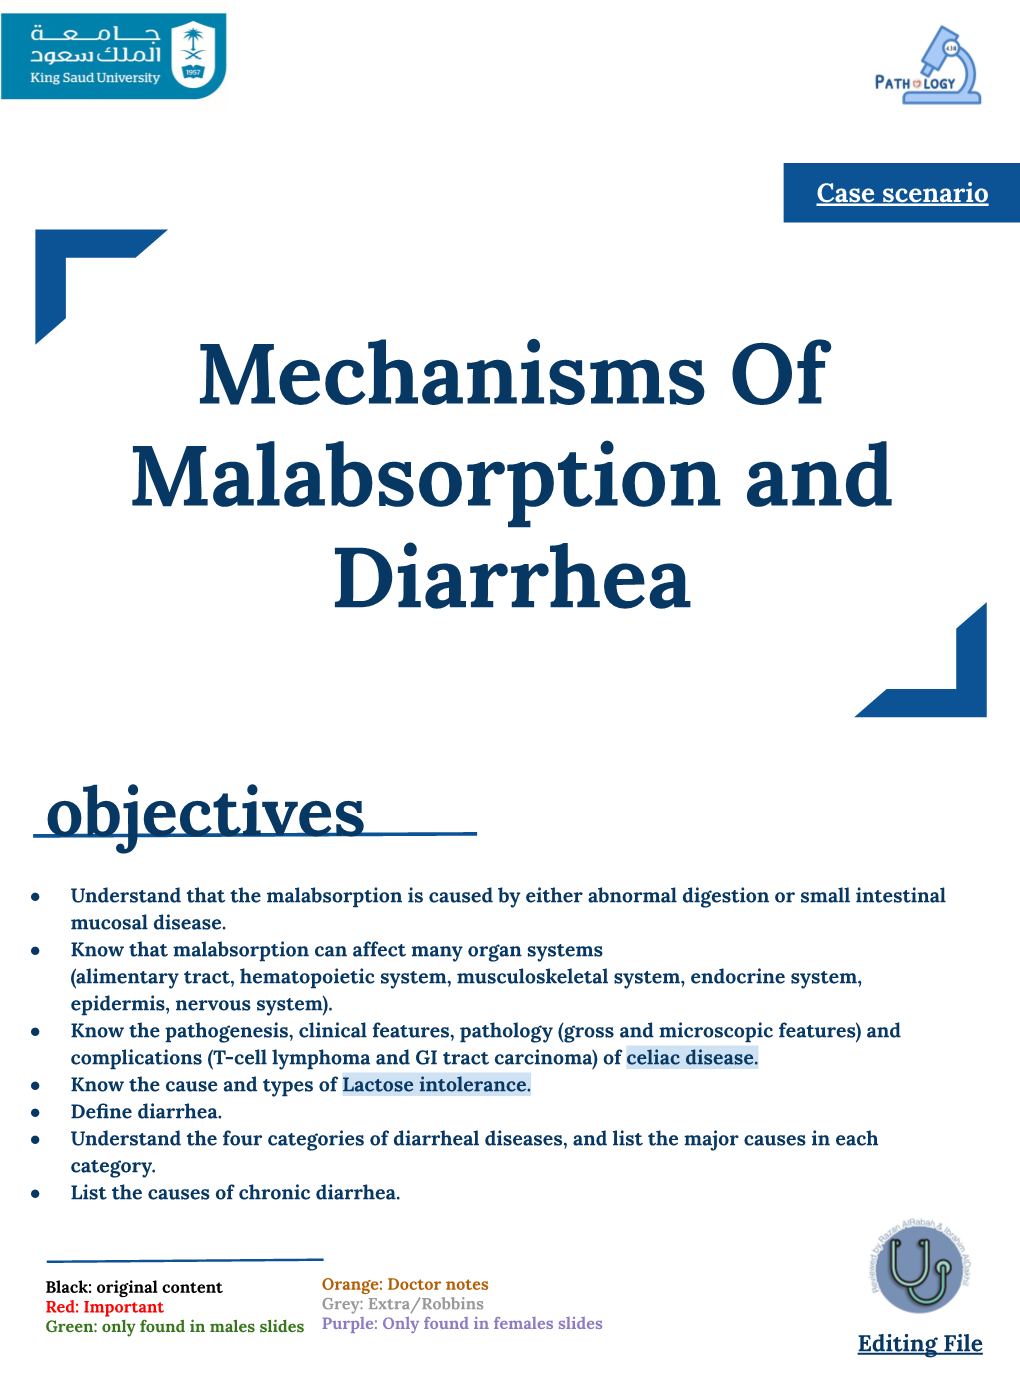 Mechanisms of Malabsorption and Diarrhea